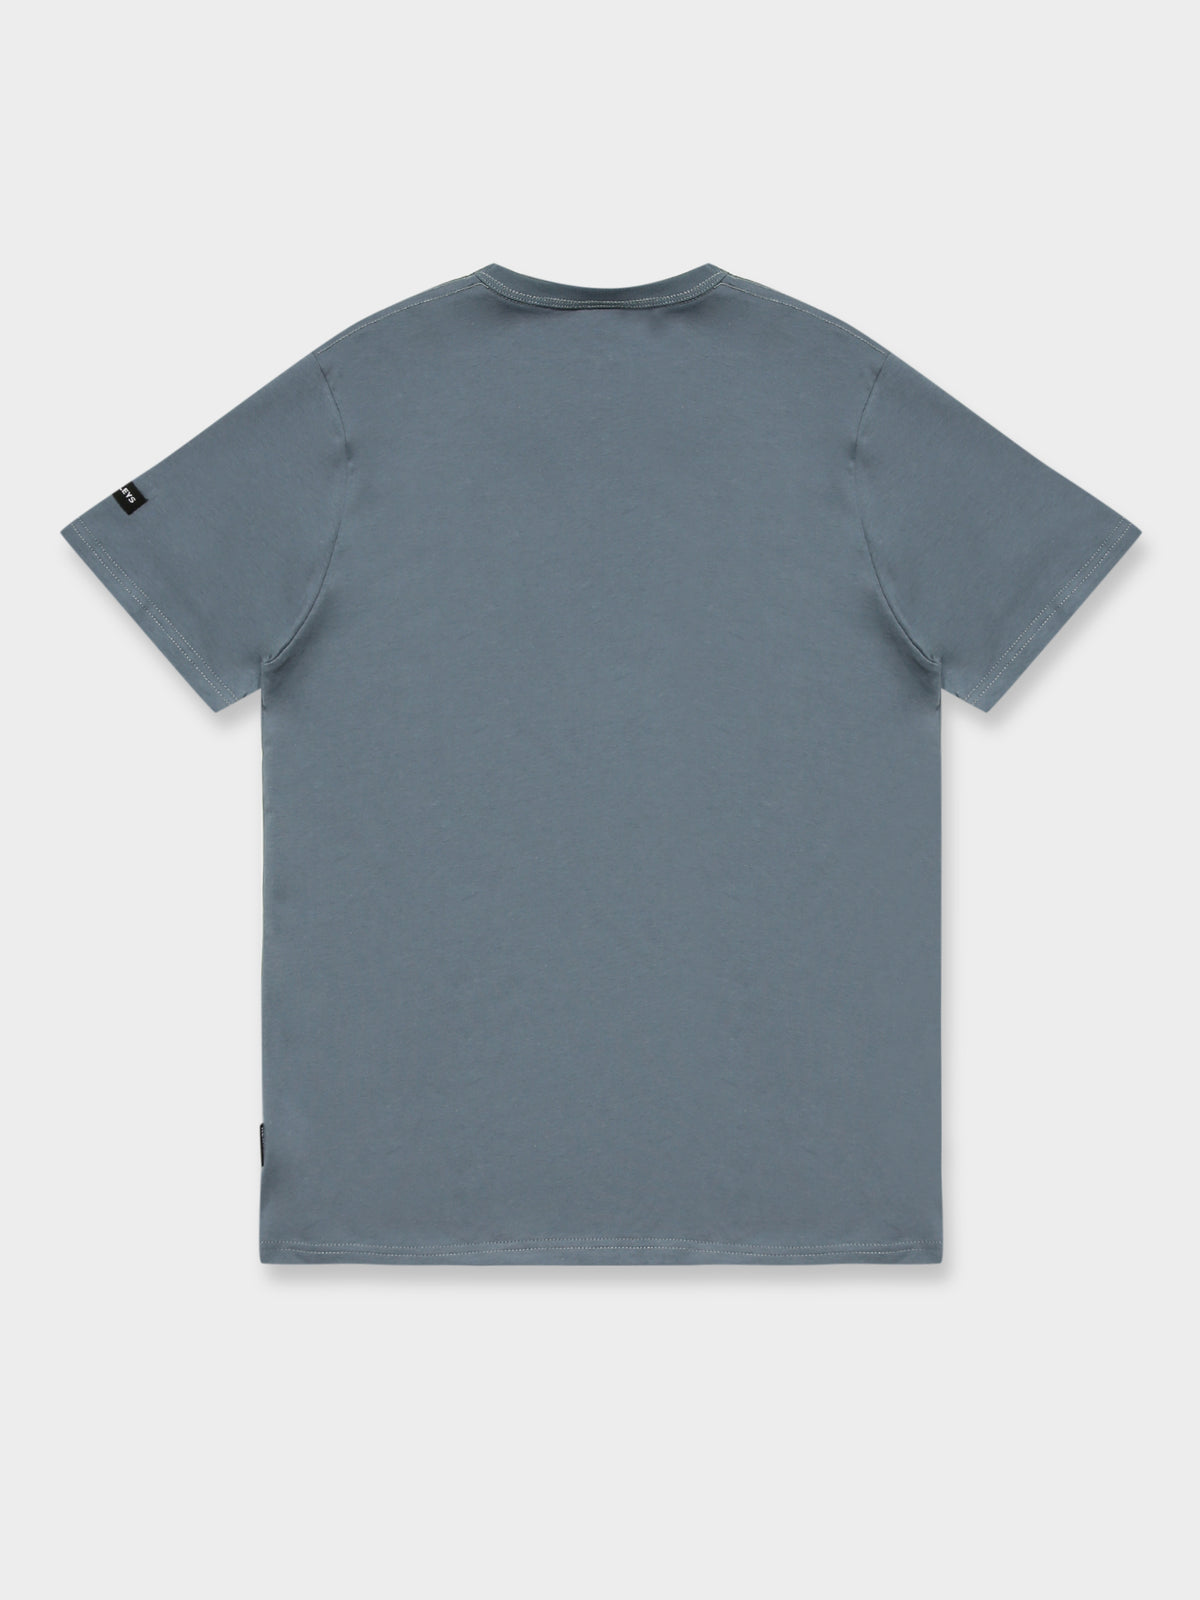 Staple T-Shirt in Steel Blue